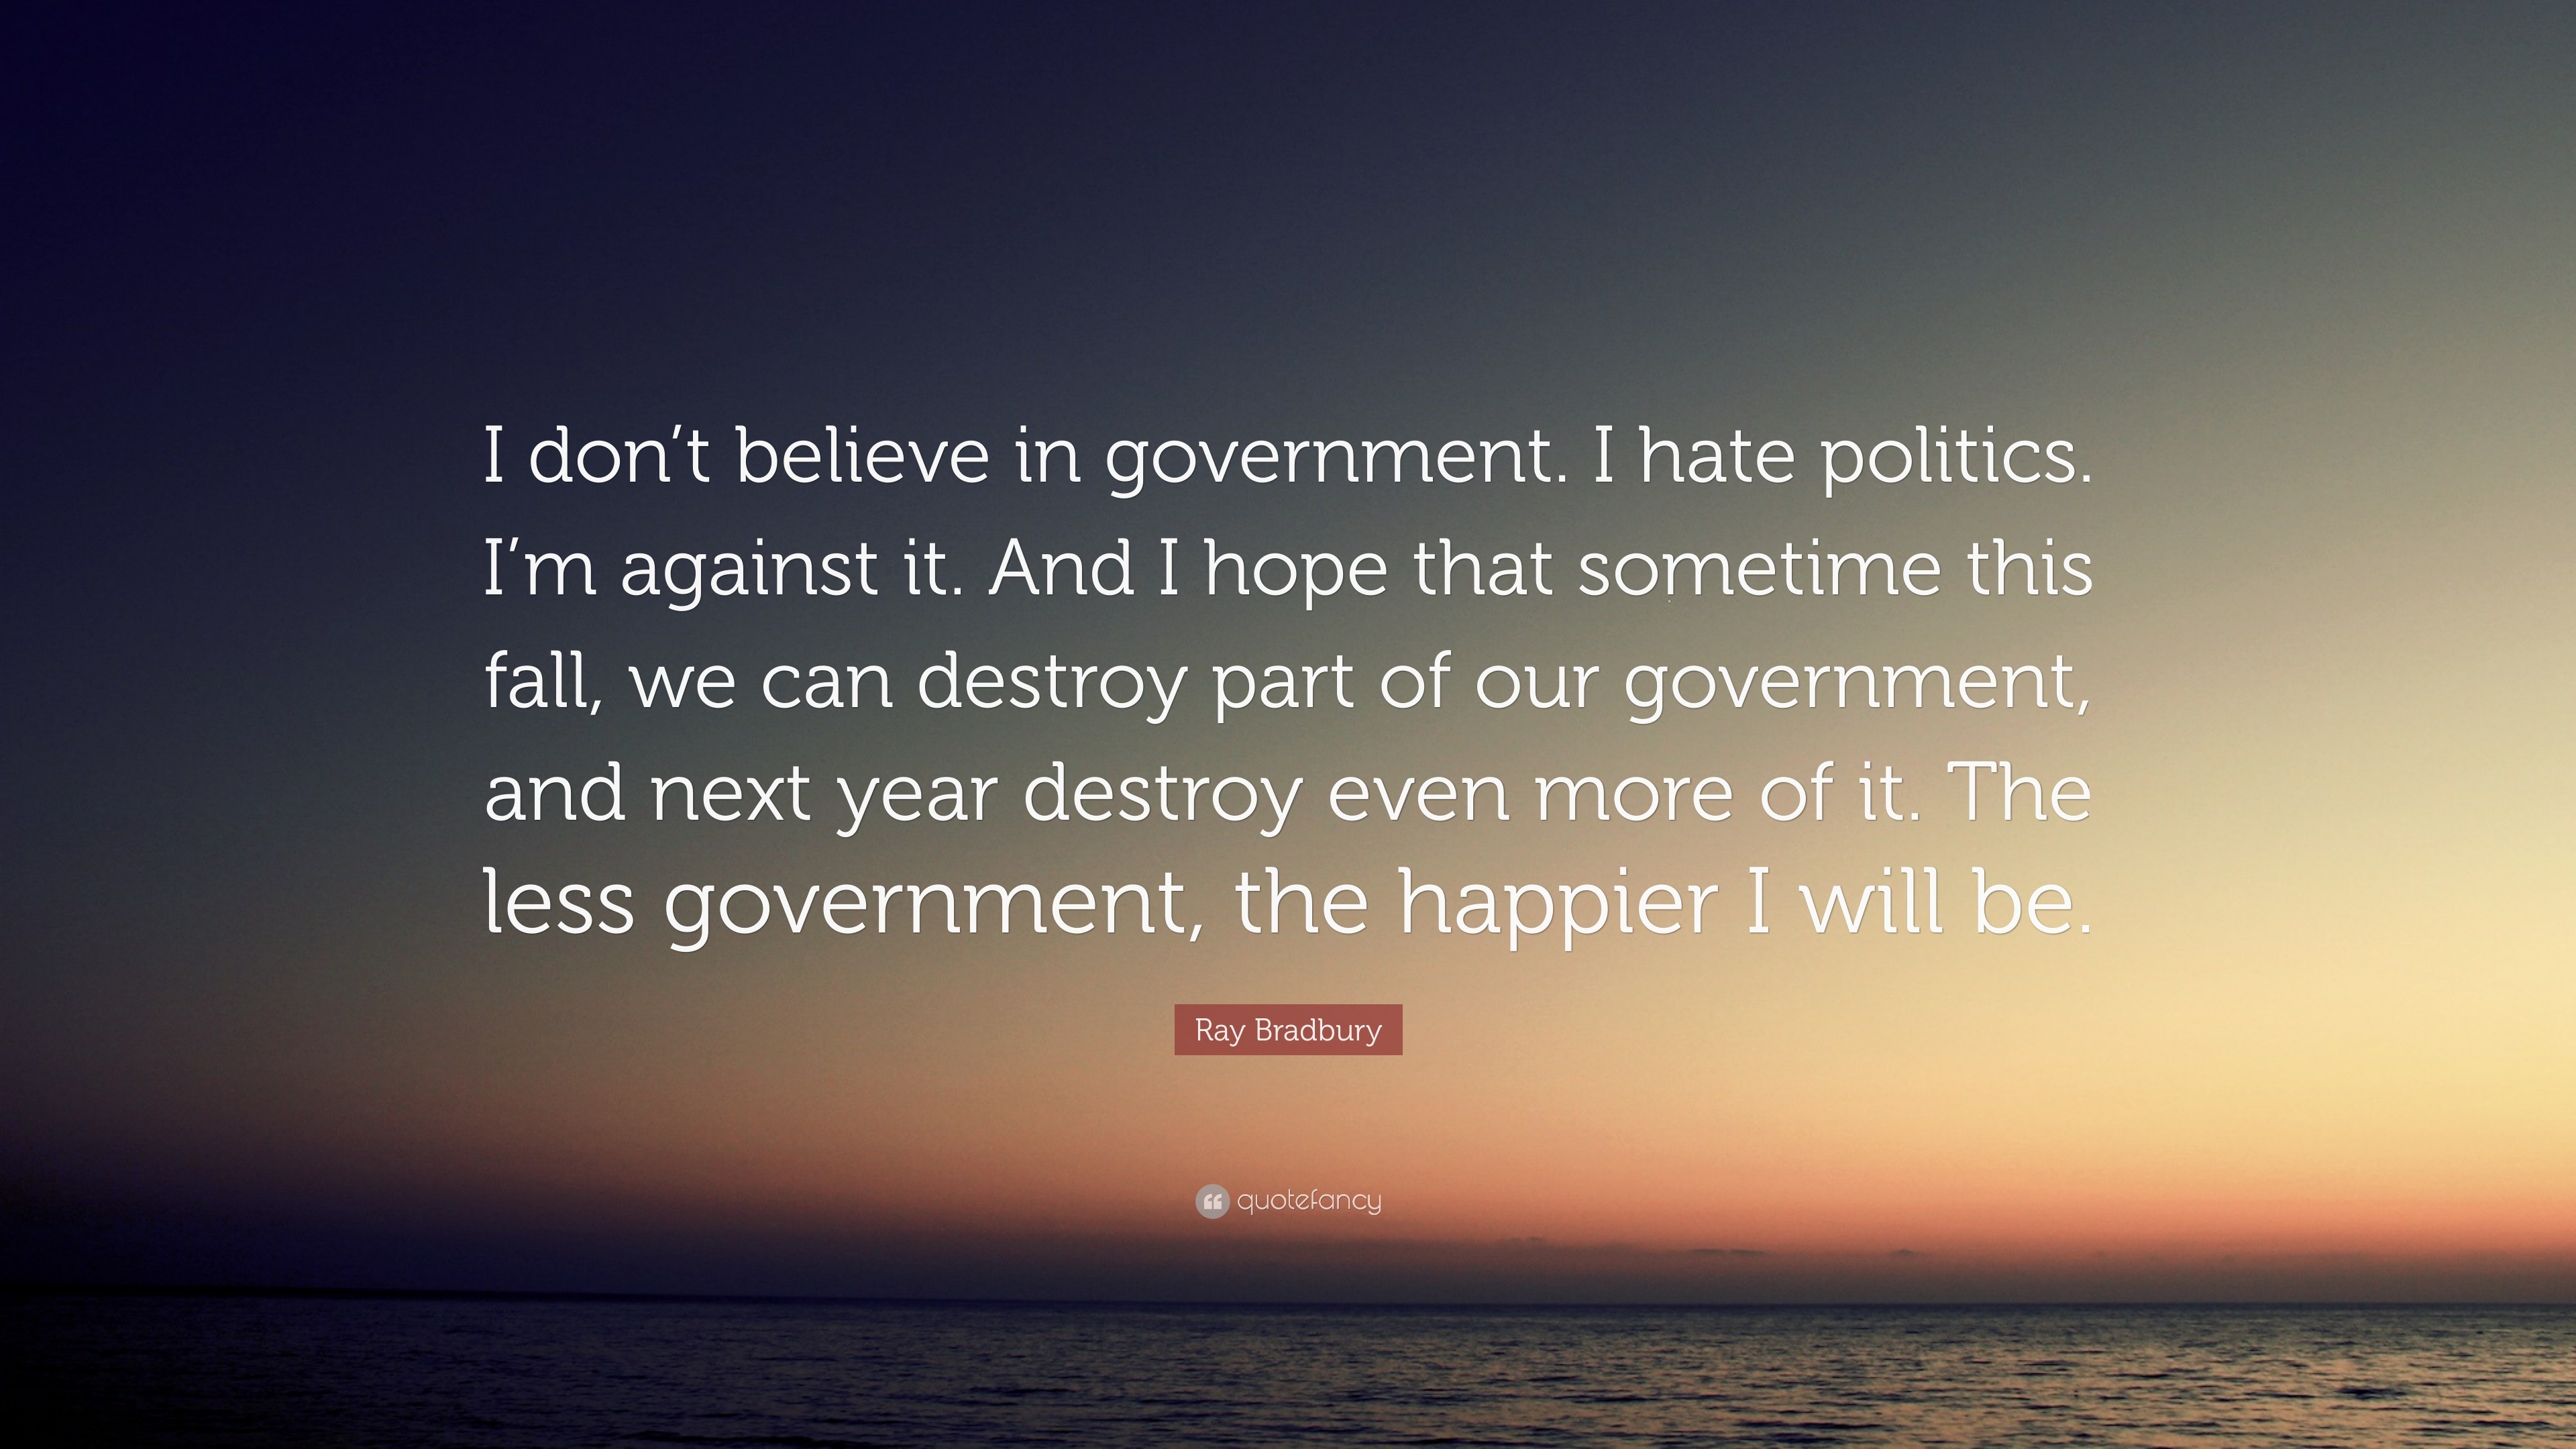 Ray Bradbury Quote “I don t believe in government I hate politics